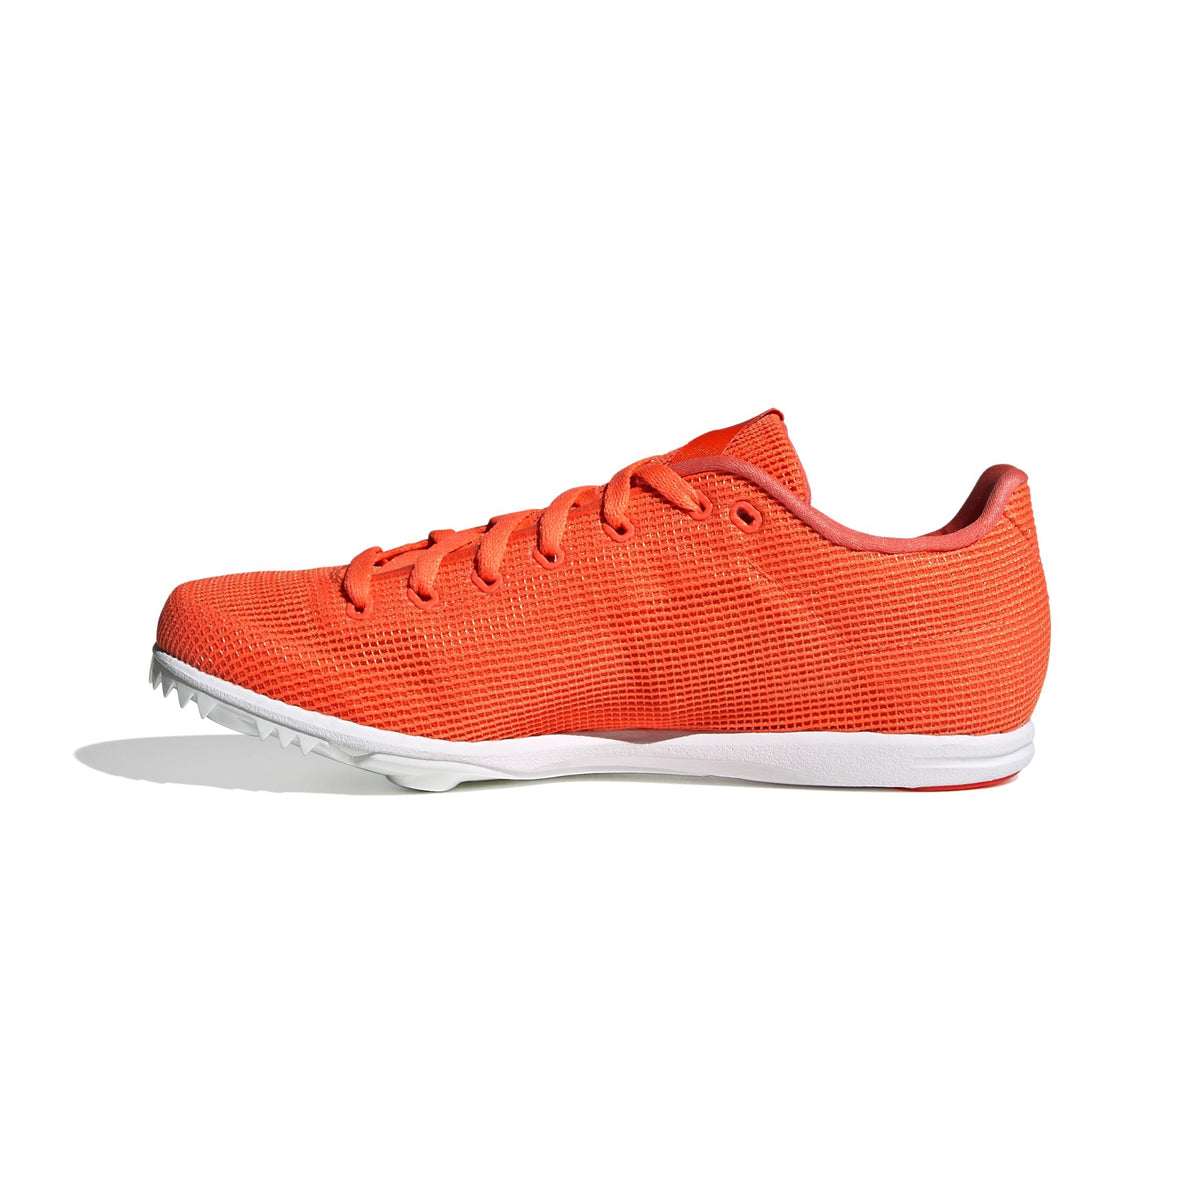 Adidas Allroundstar Kids Running Spikes: Coral